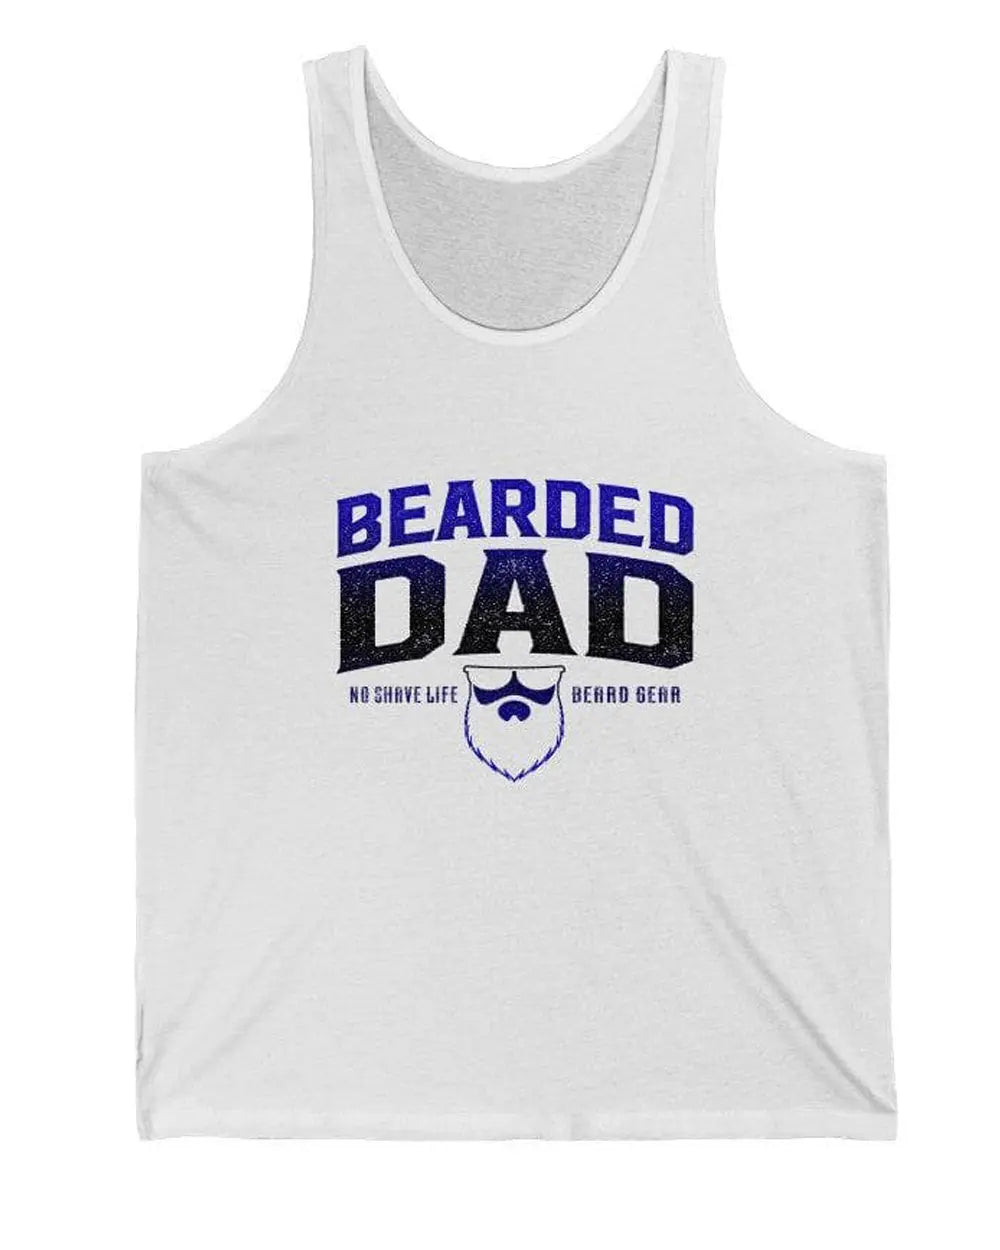 Bearded Dad White Men's Tank Top|Mens Tank Top